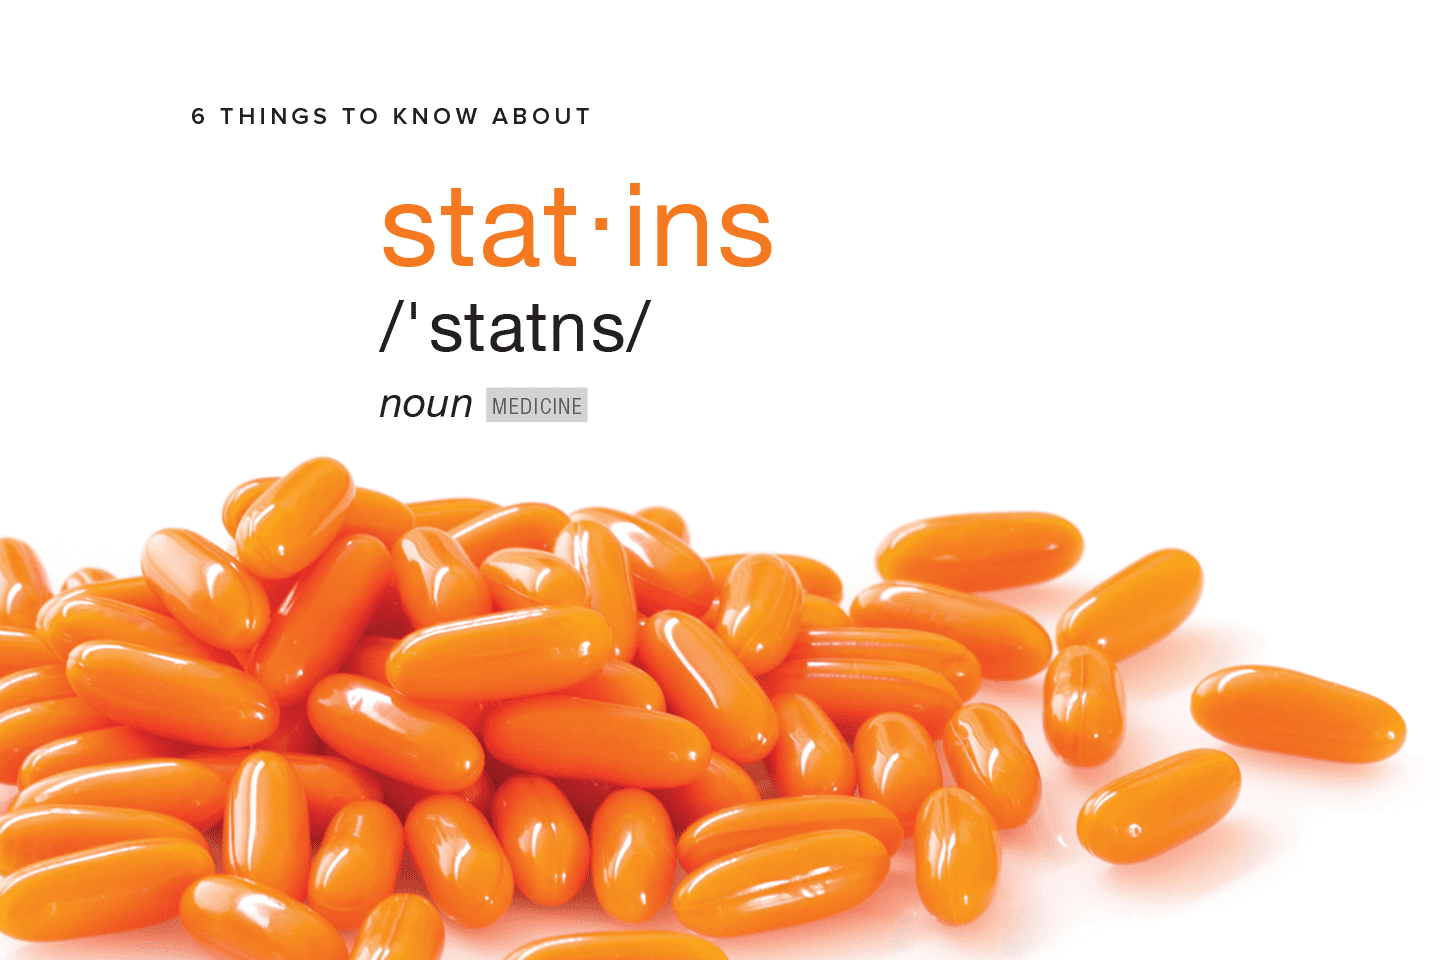 statins chattanooga orange pills